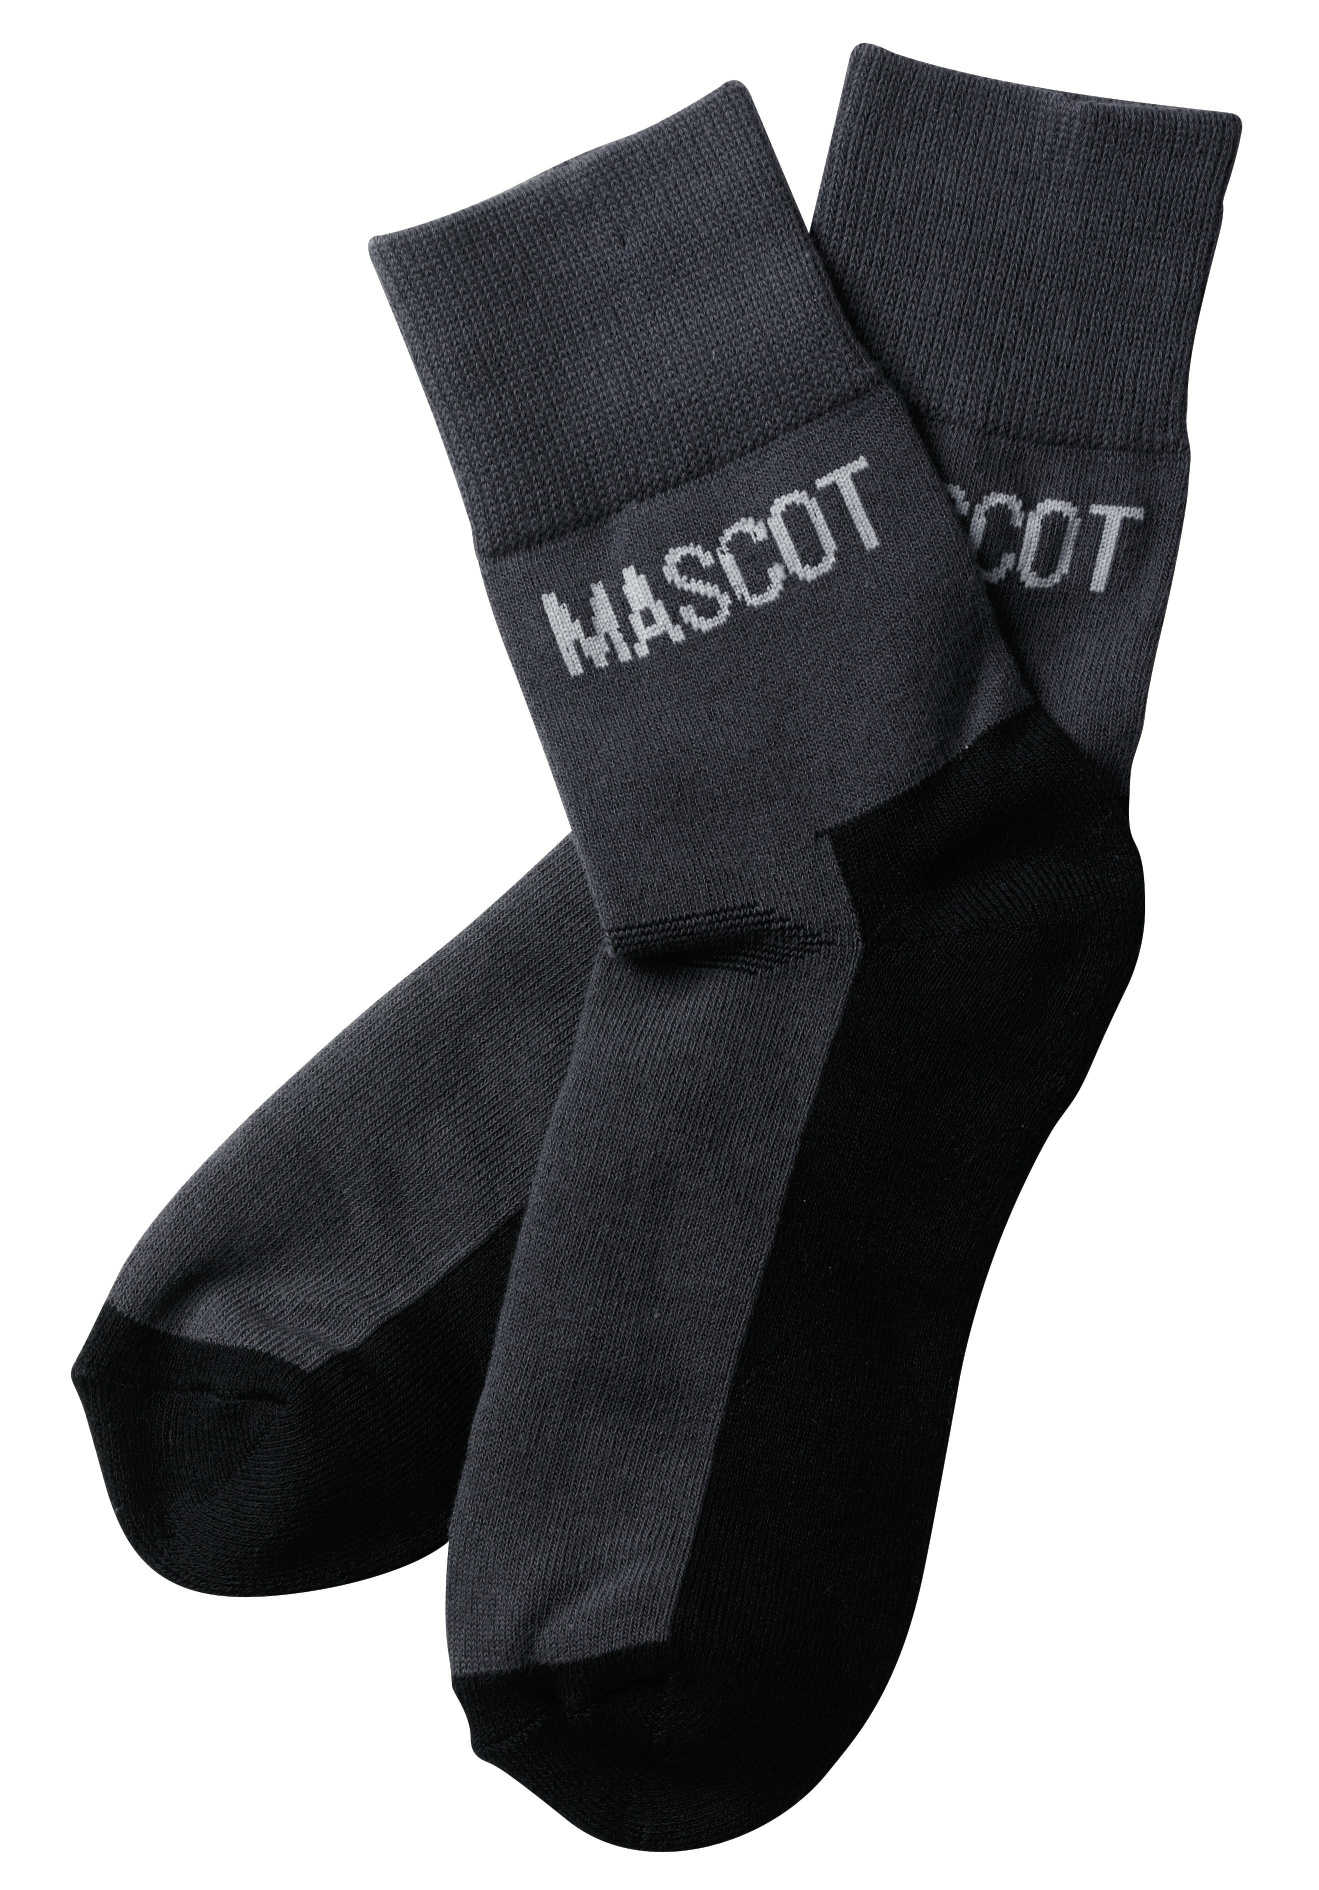 MASCOT Compete Socken "Tanga" Nr. 50407-875-1809